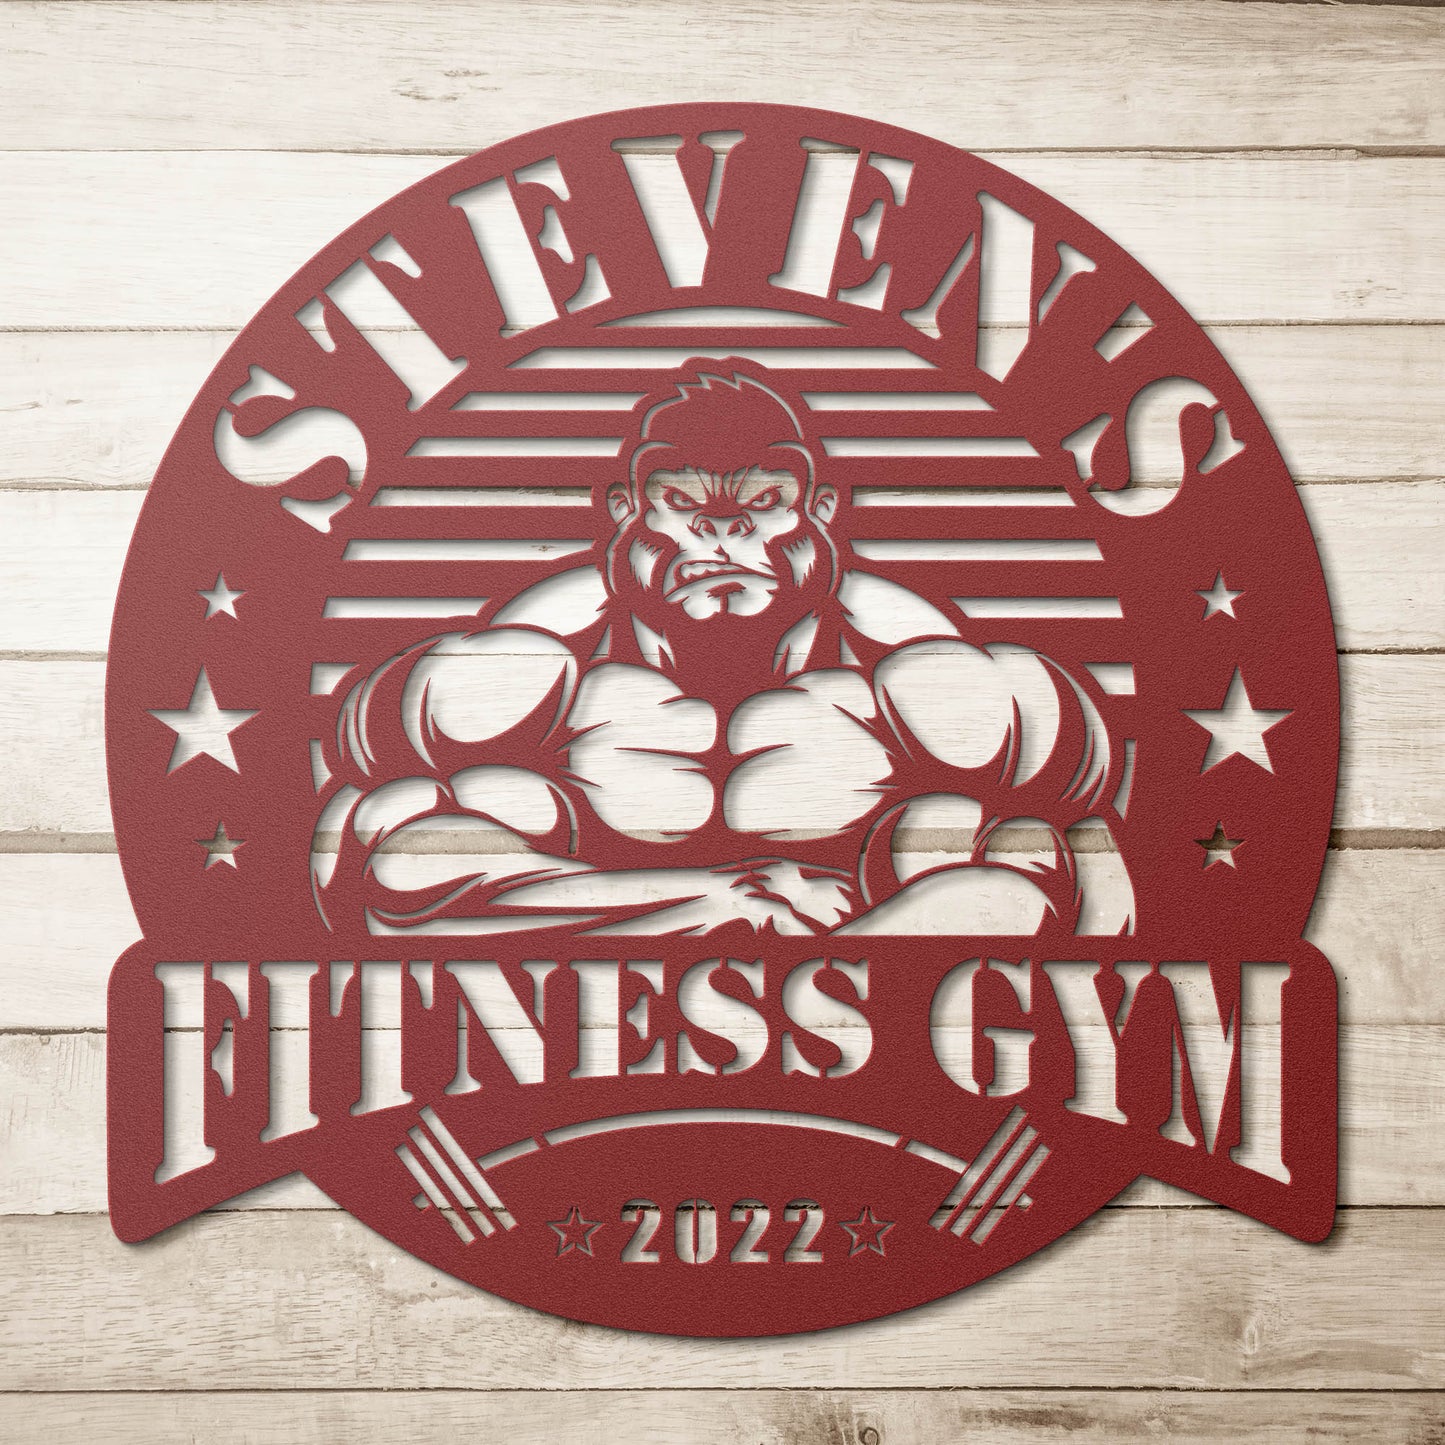 Custom Fitness Home Gym Steel Sign